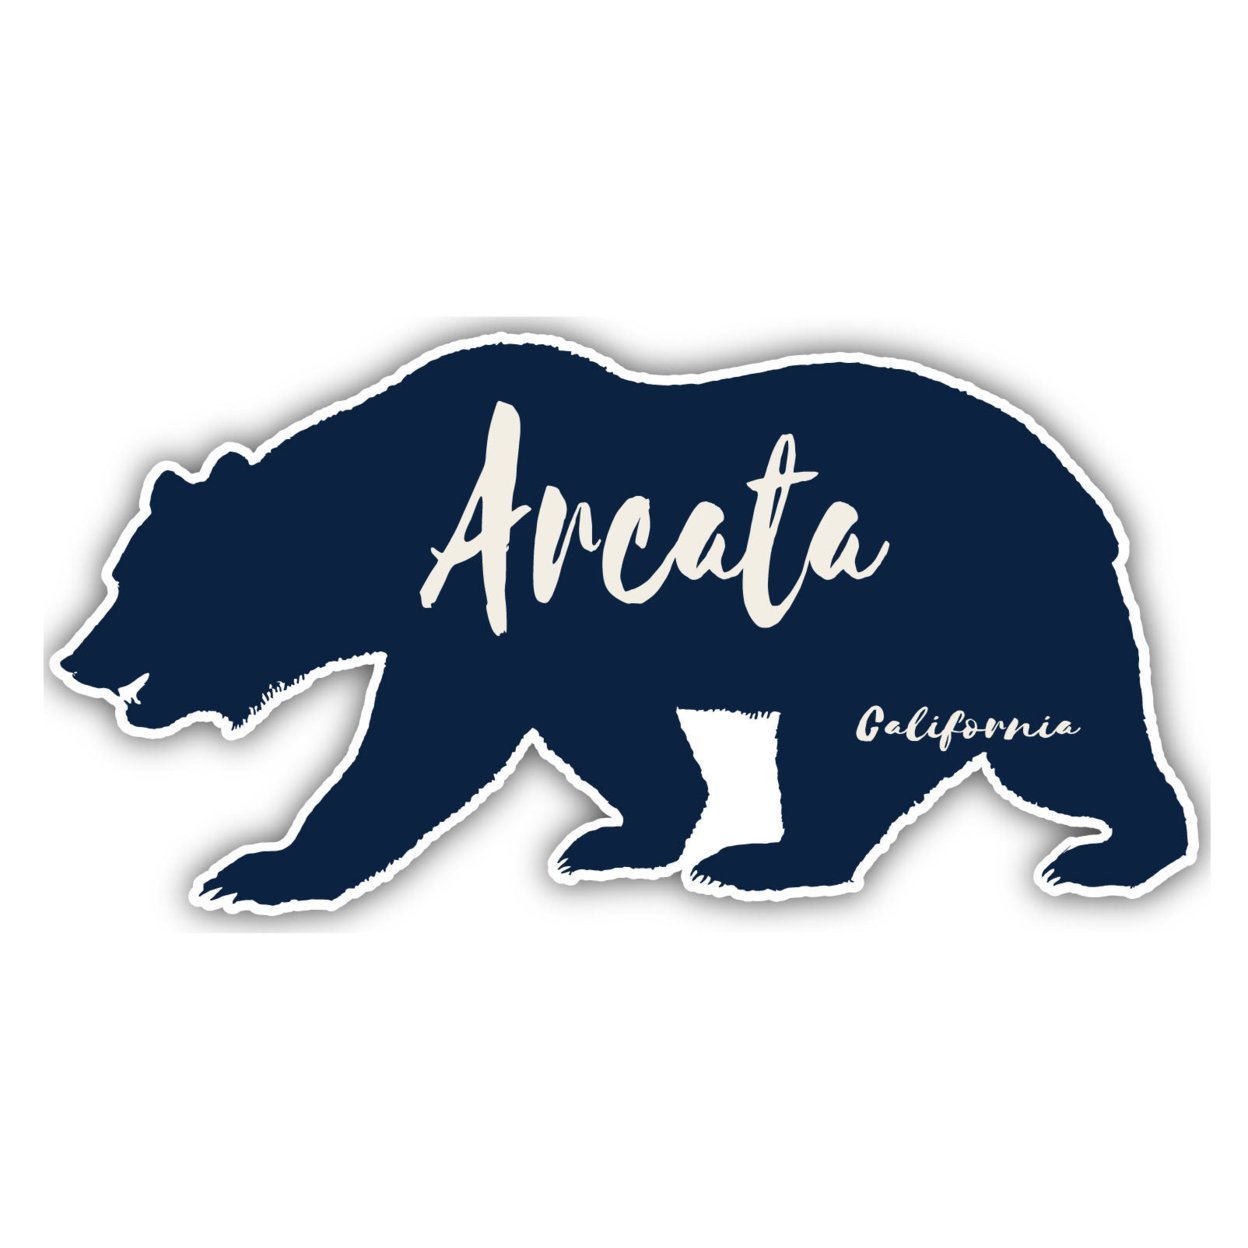 Arcata California Souvenir Decorative Stickers (Choose Theme And Size) - 4-Pack, 4-Inch, Bear